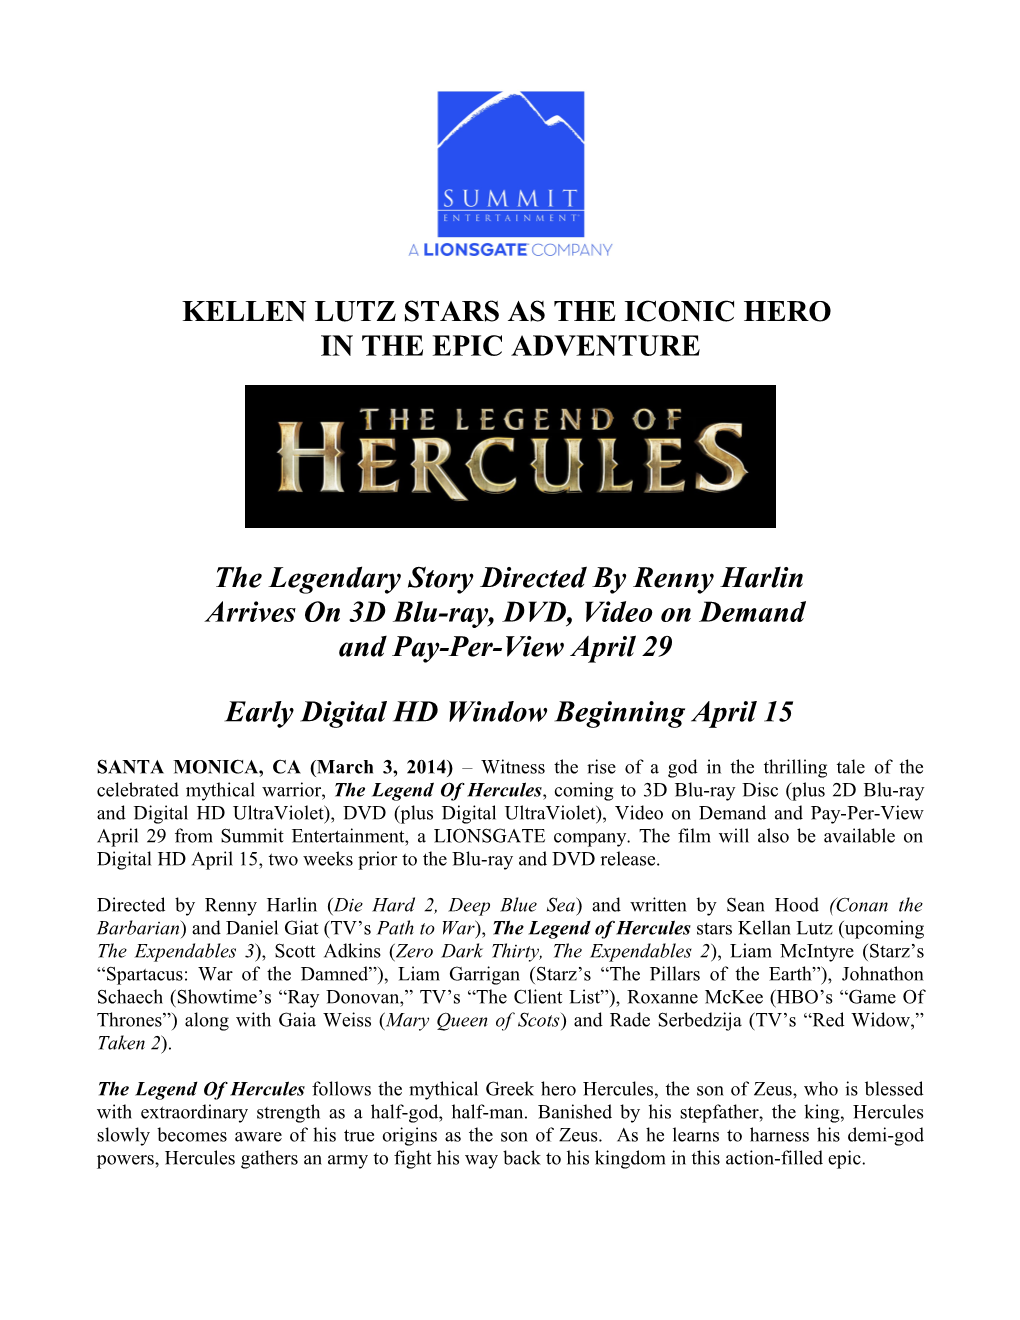 Kellen Lutz Stars As the Iconic Hero in the Epic Adventure